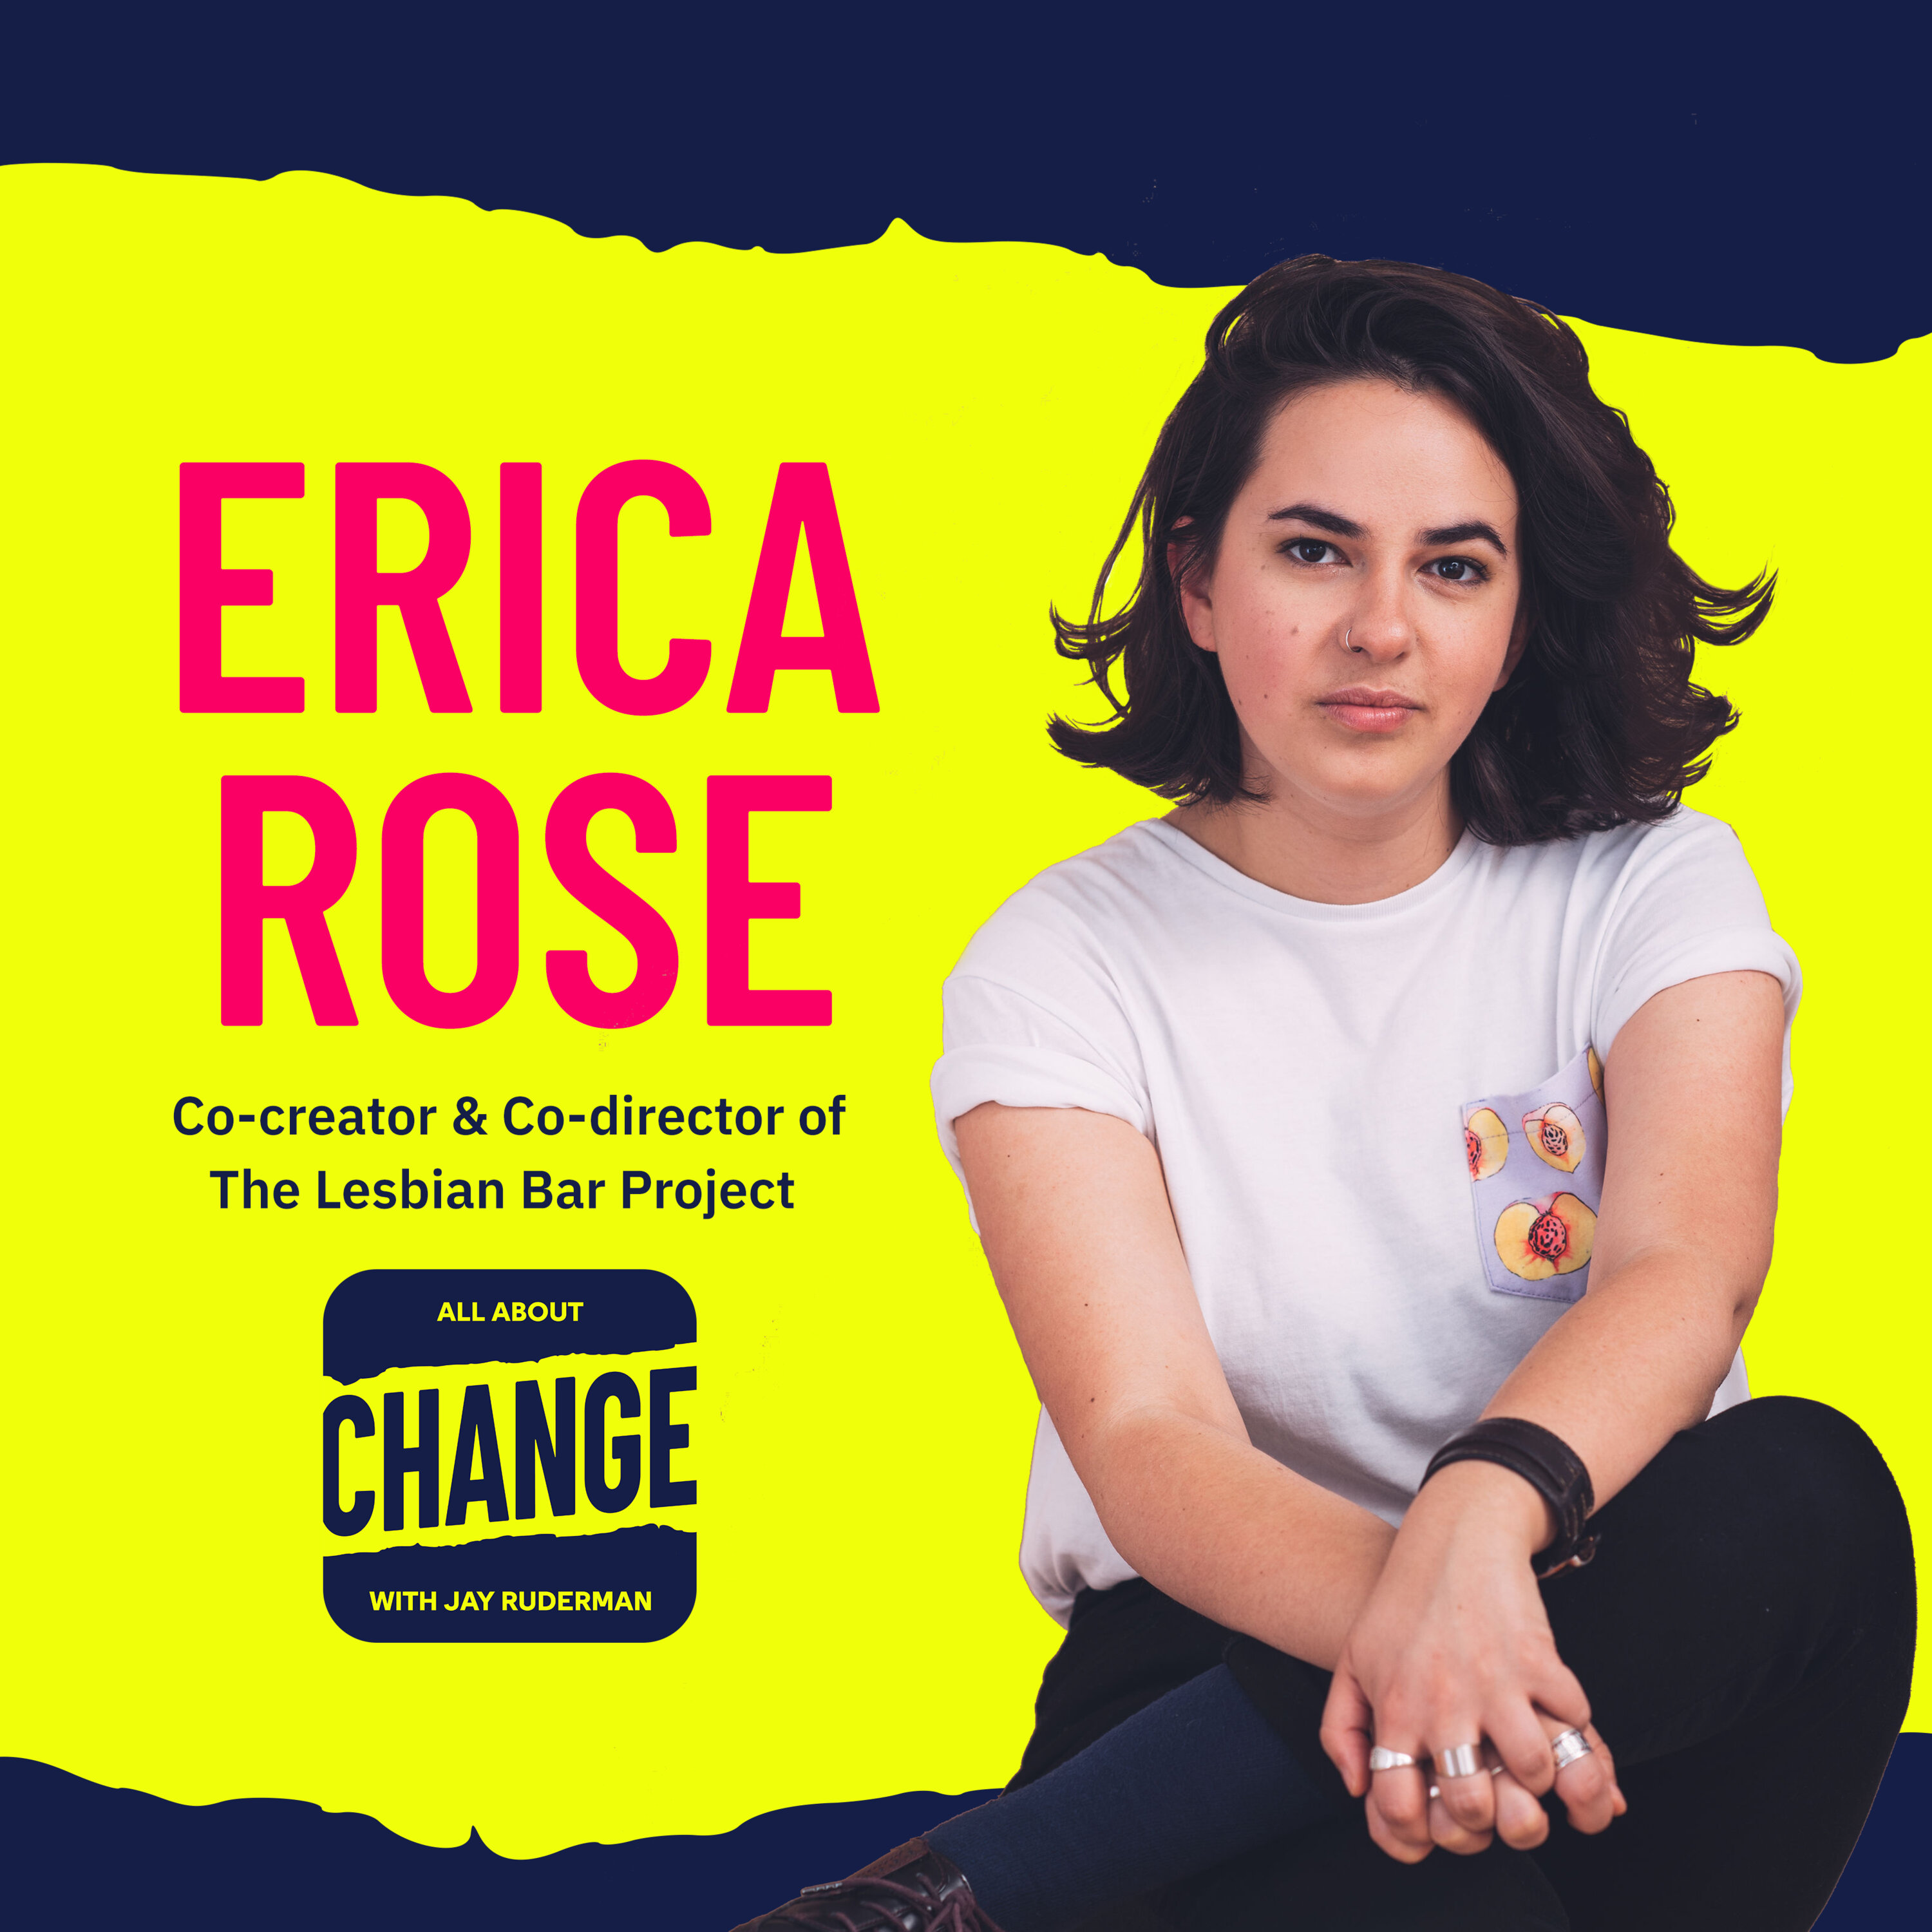 Erica Rose - Co-creator & Co-director of The Lesbian Bar